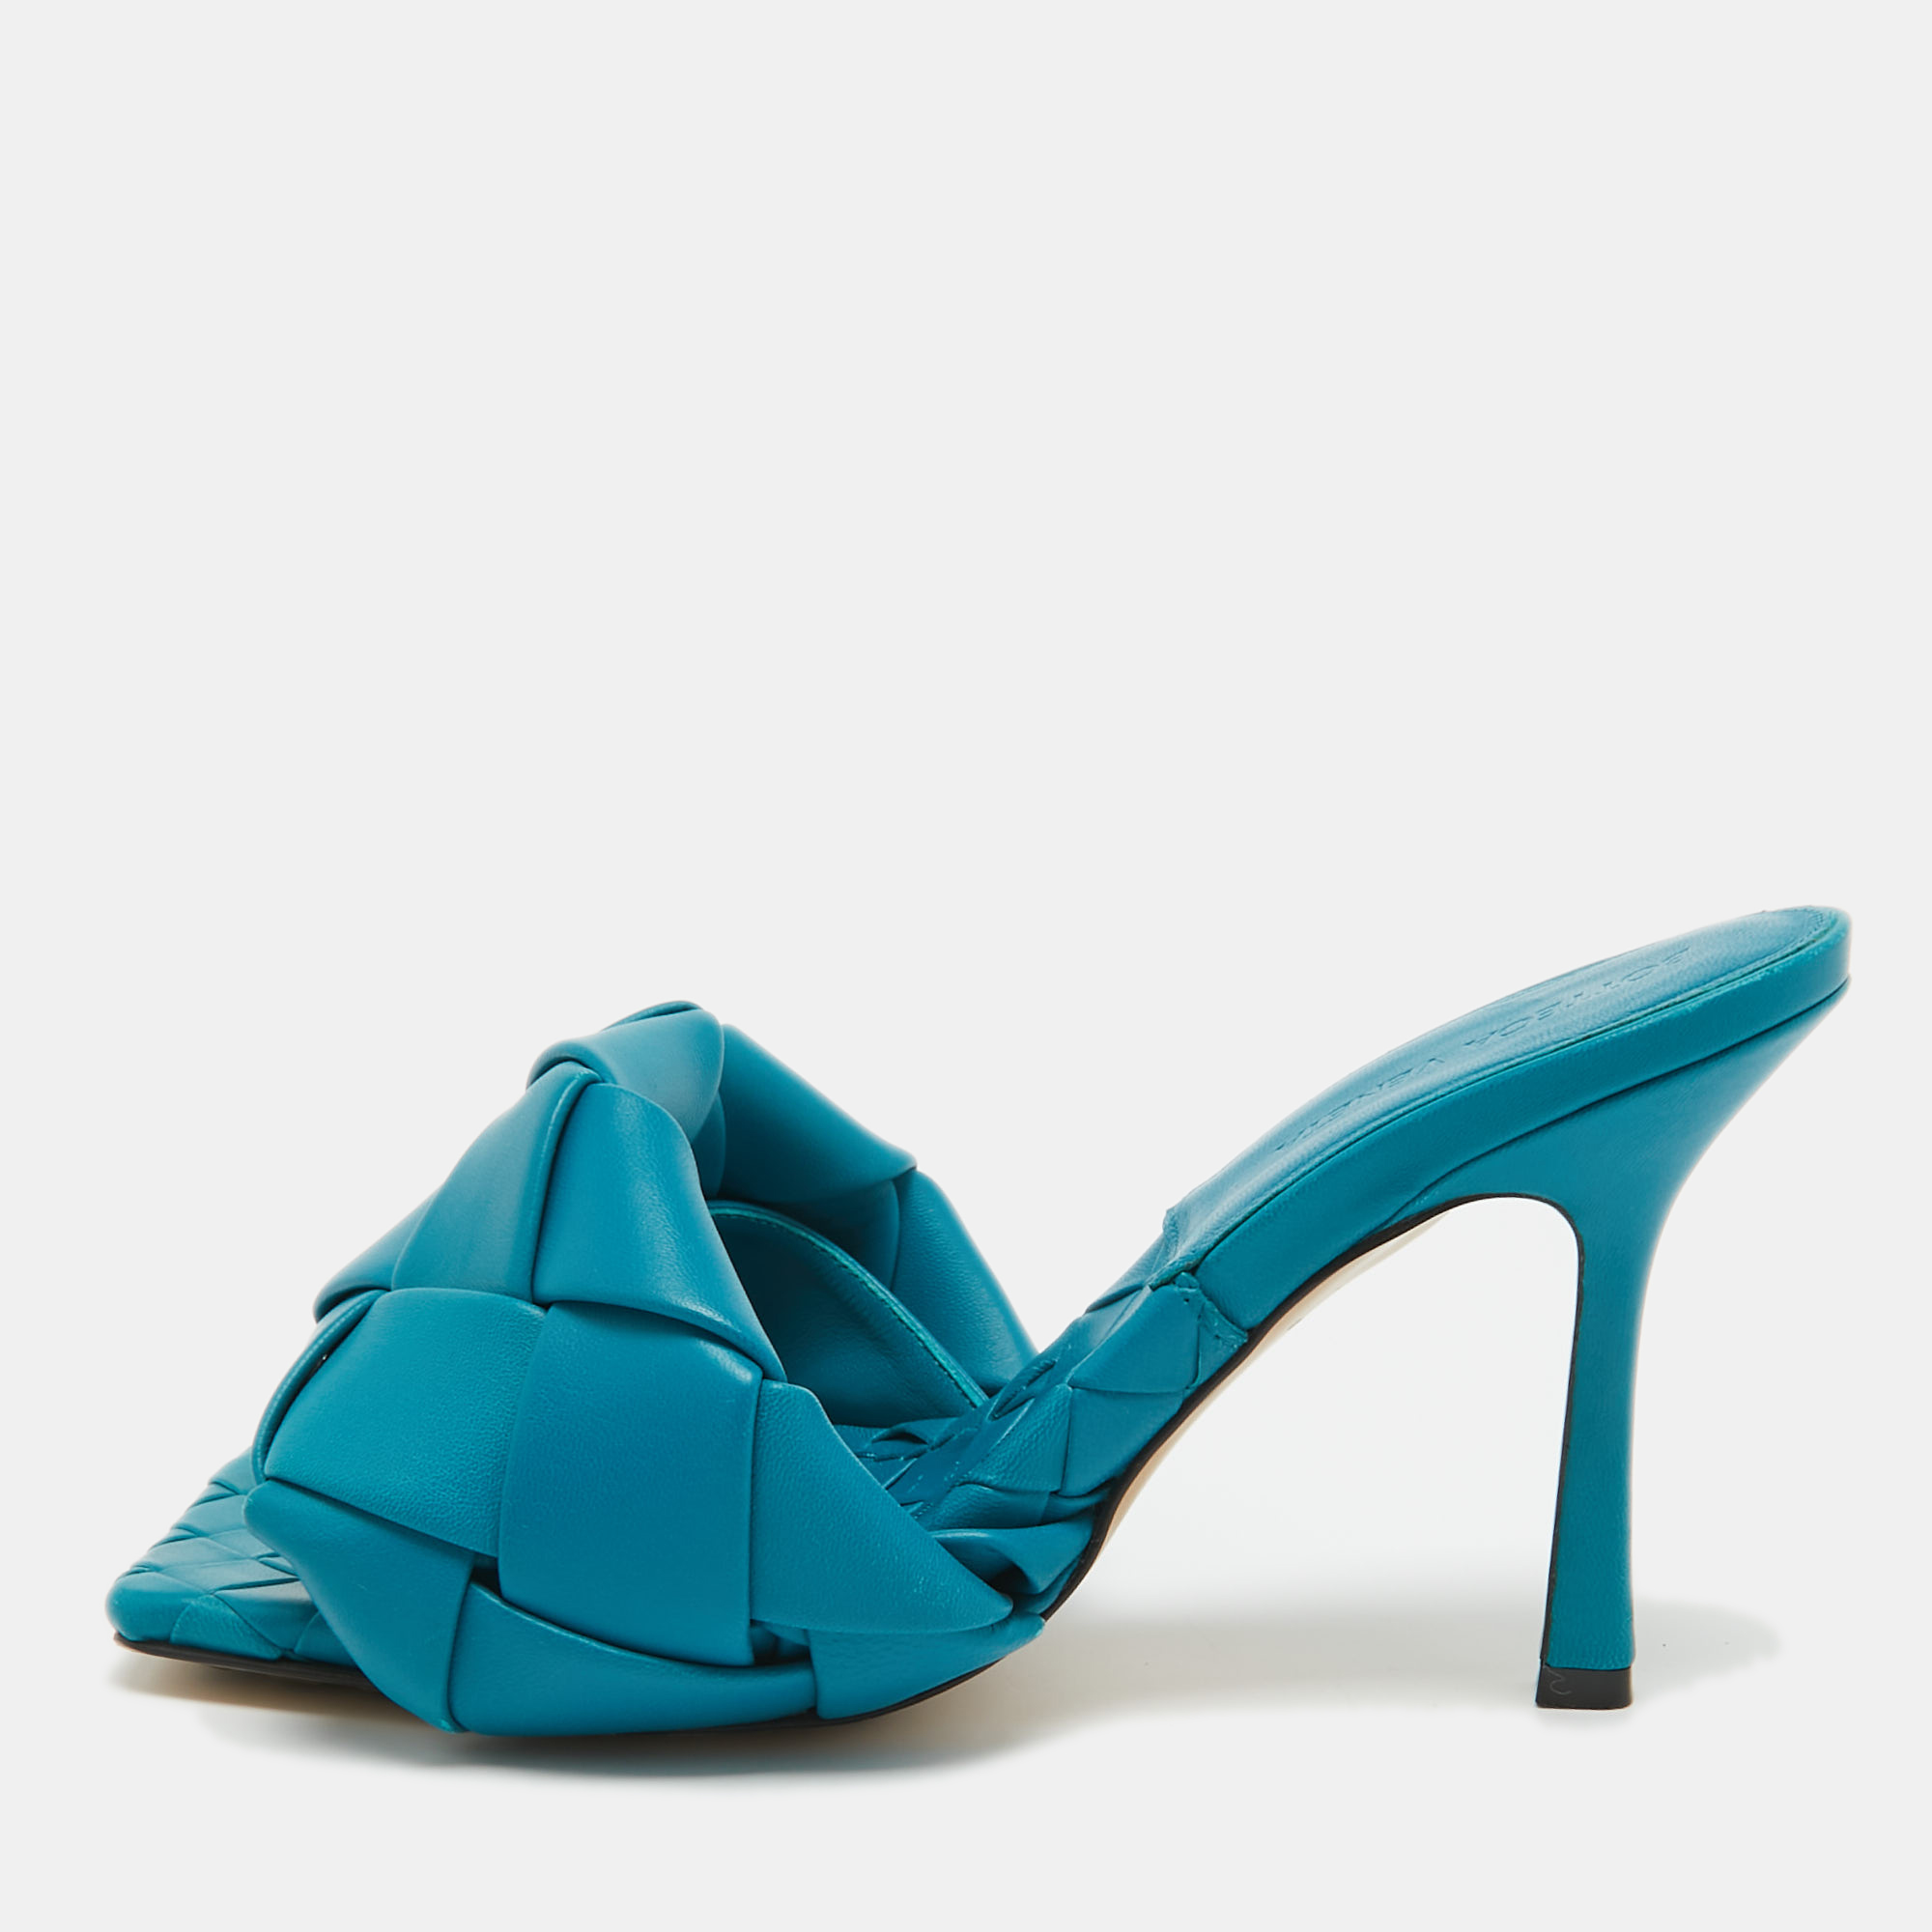 Bottega veneta blue intrecciato leather lido slide sandals size 38